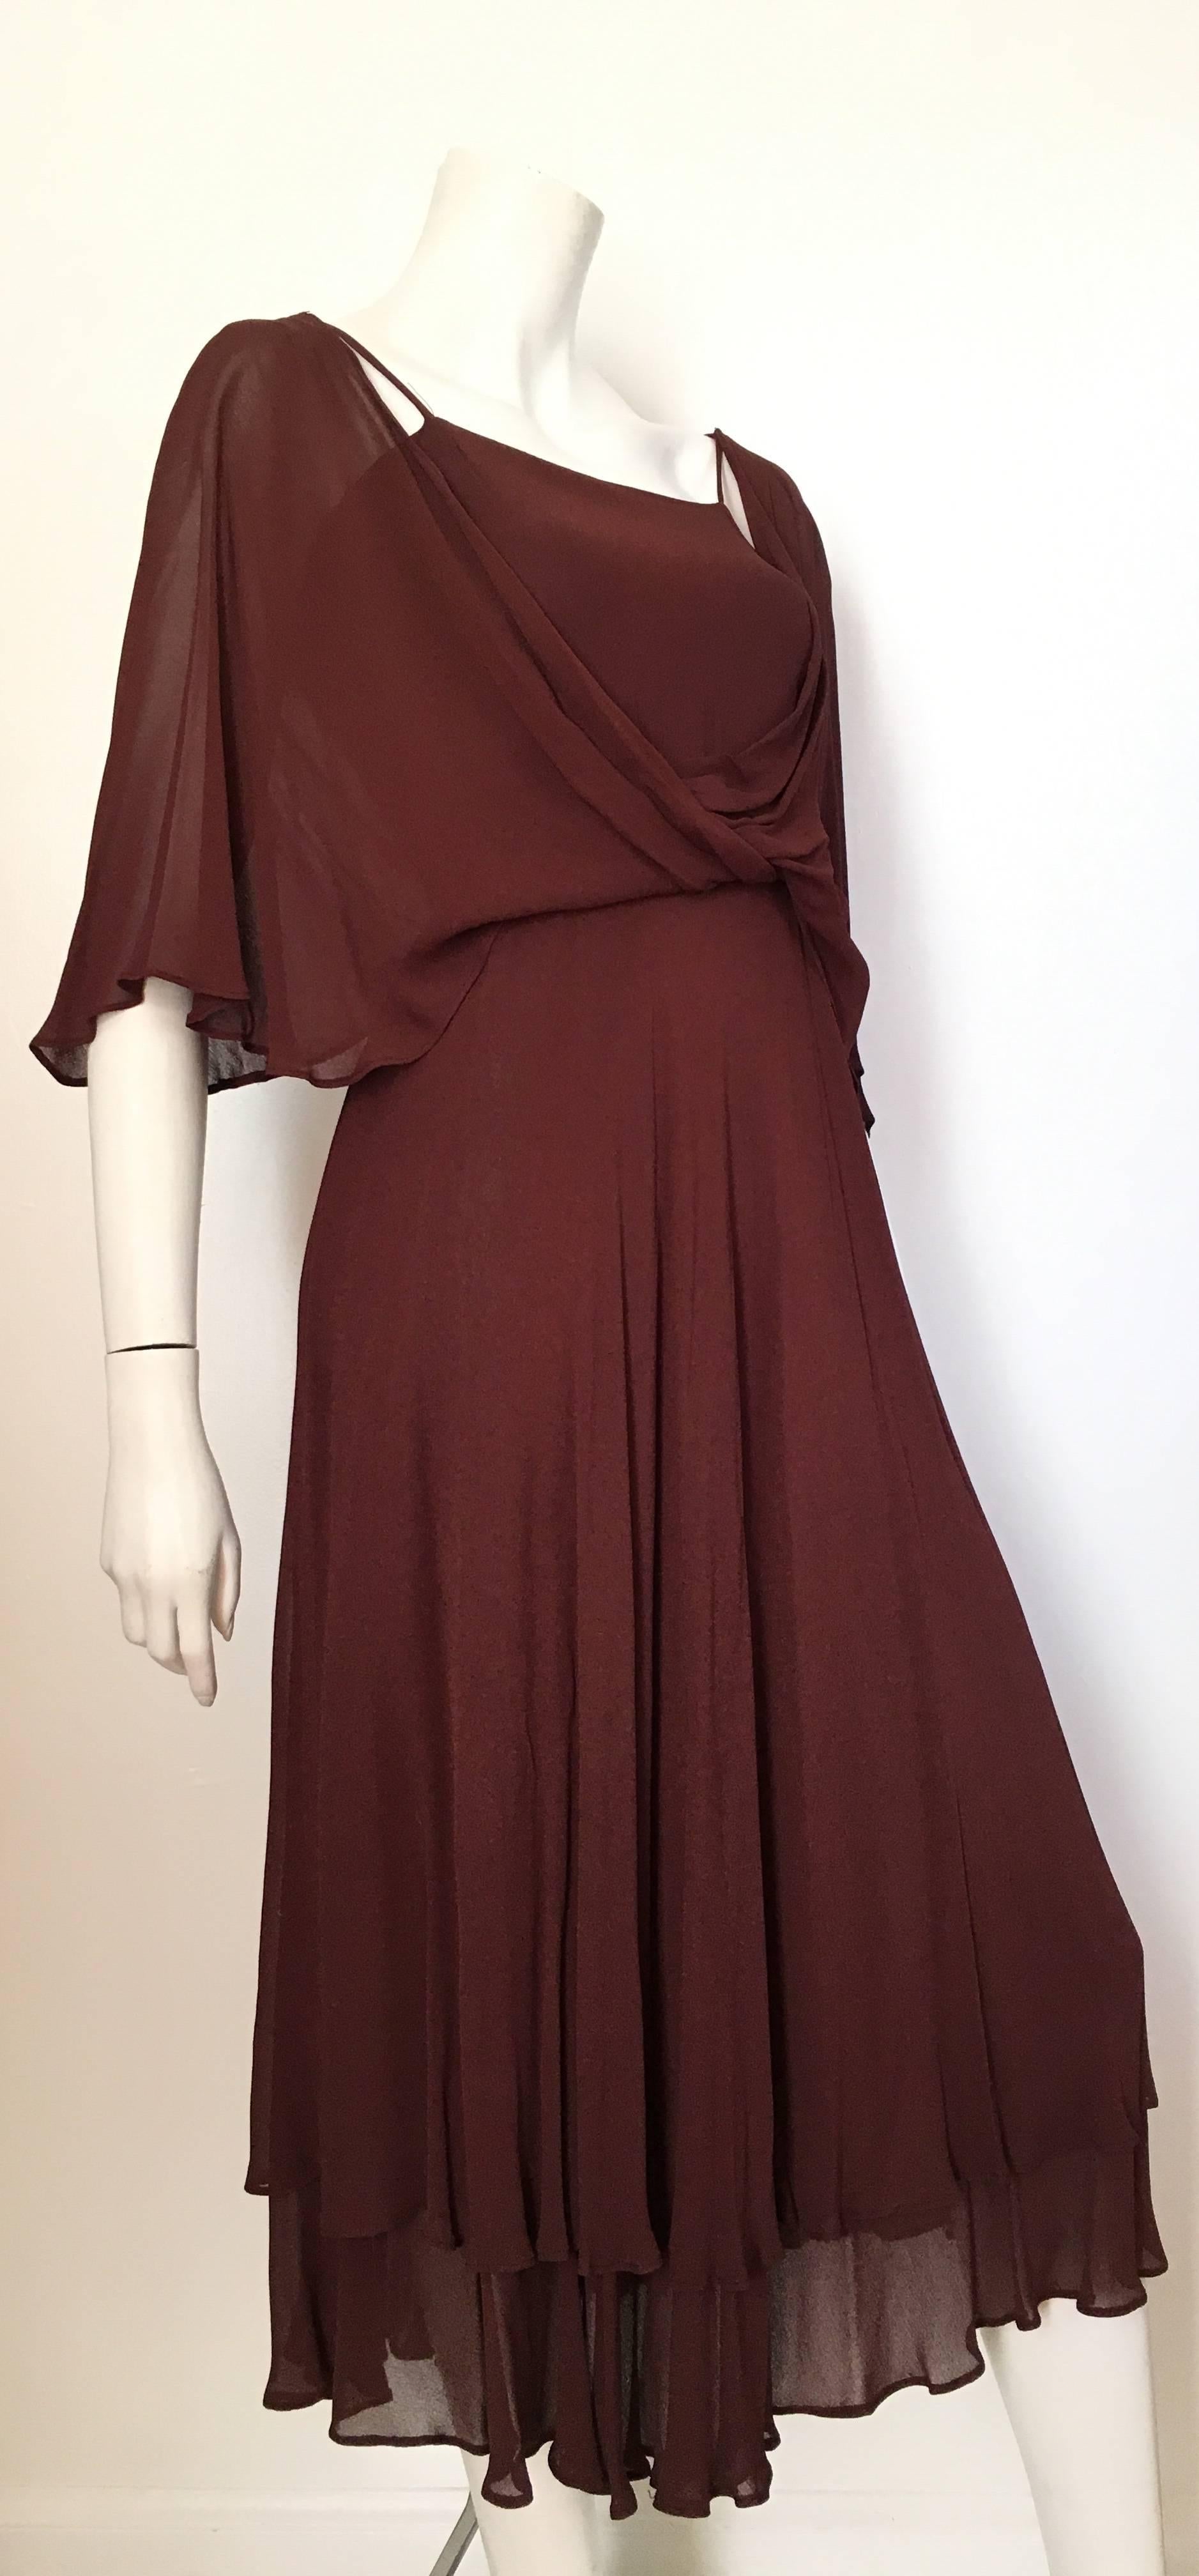 rusty brown dress